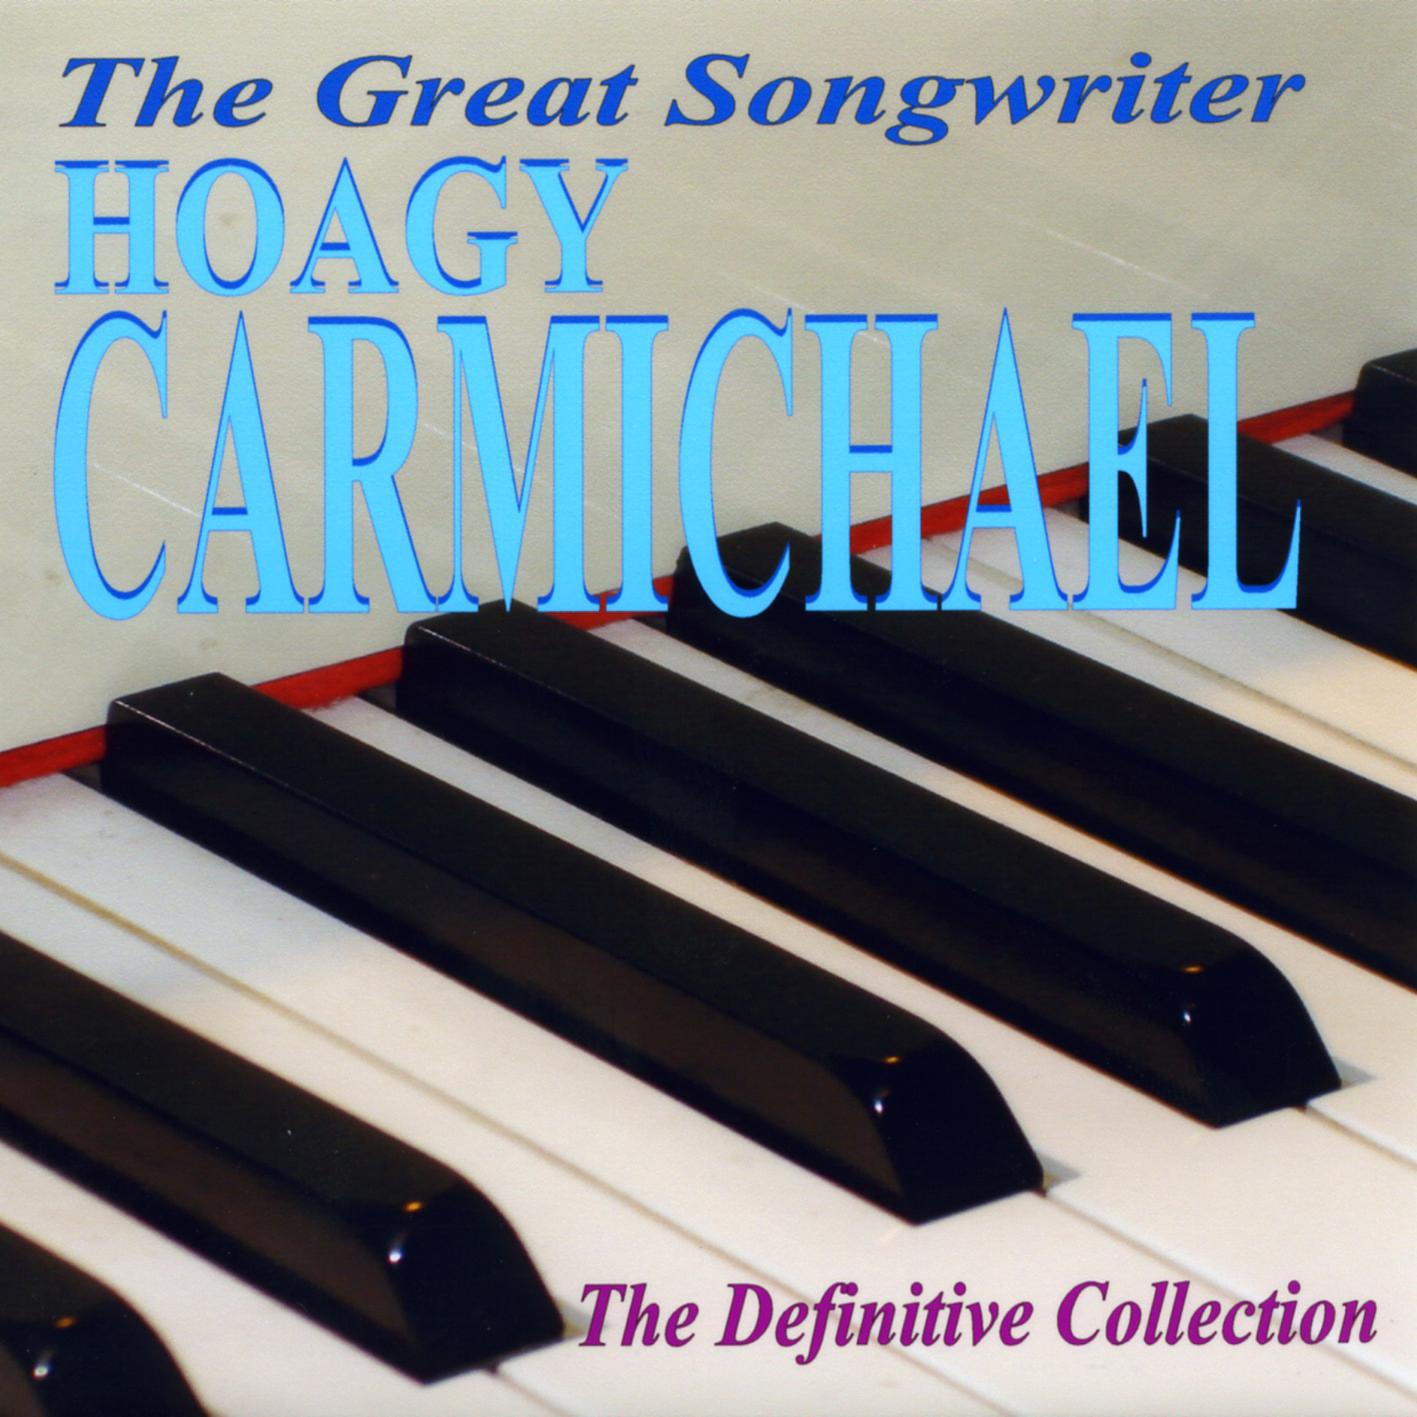 The Great Songwriter - Hoagy Carmichael